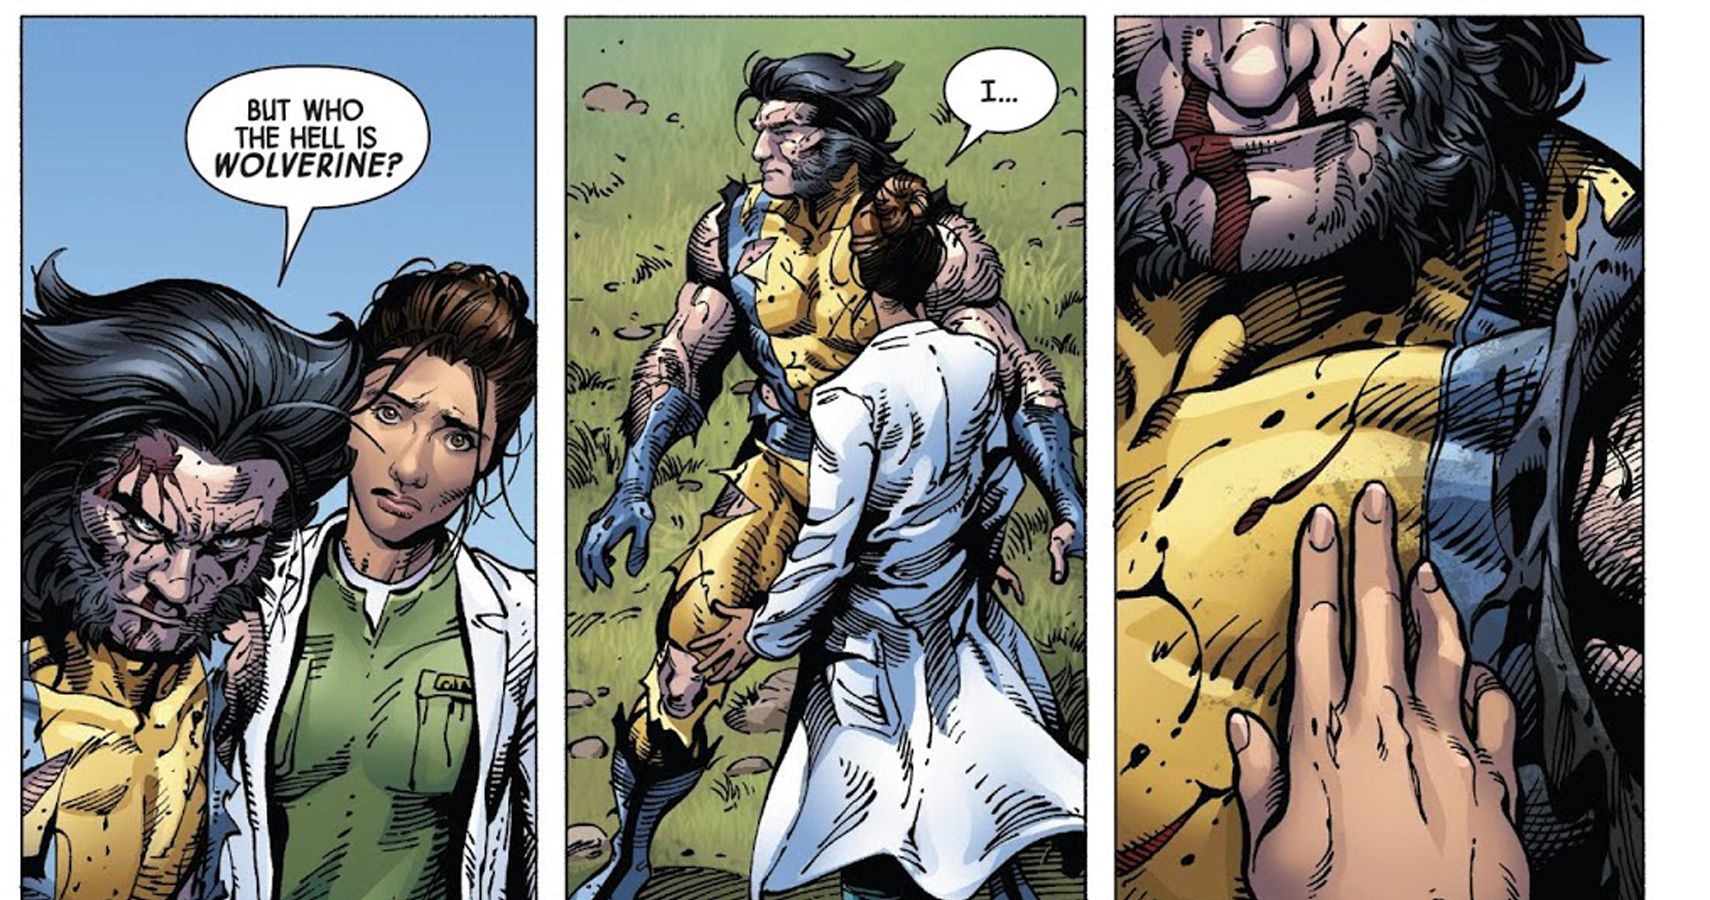 Return of Wolverine no memory